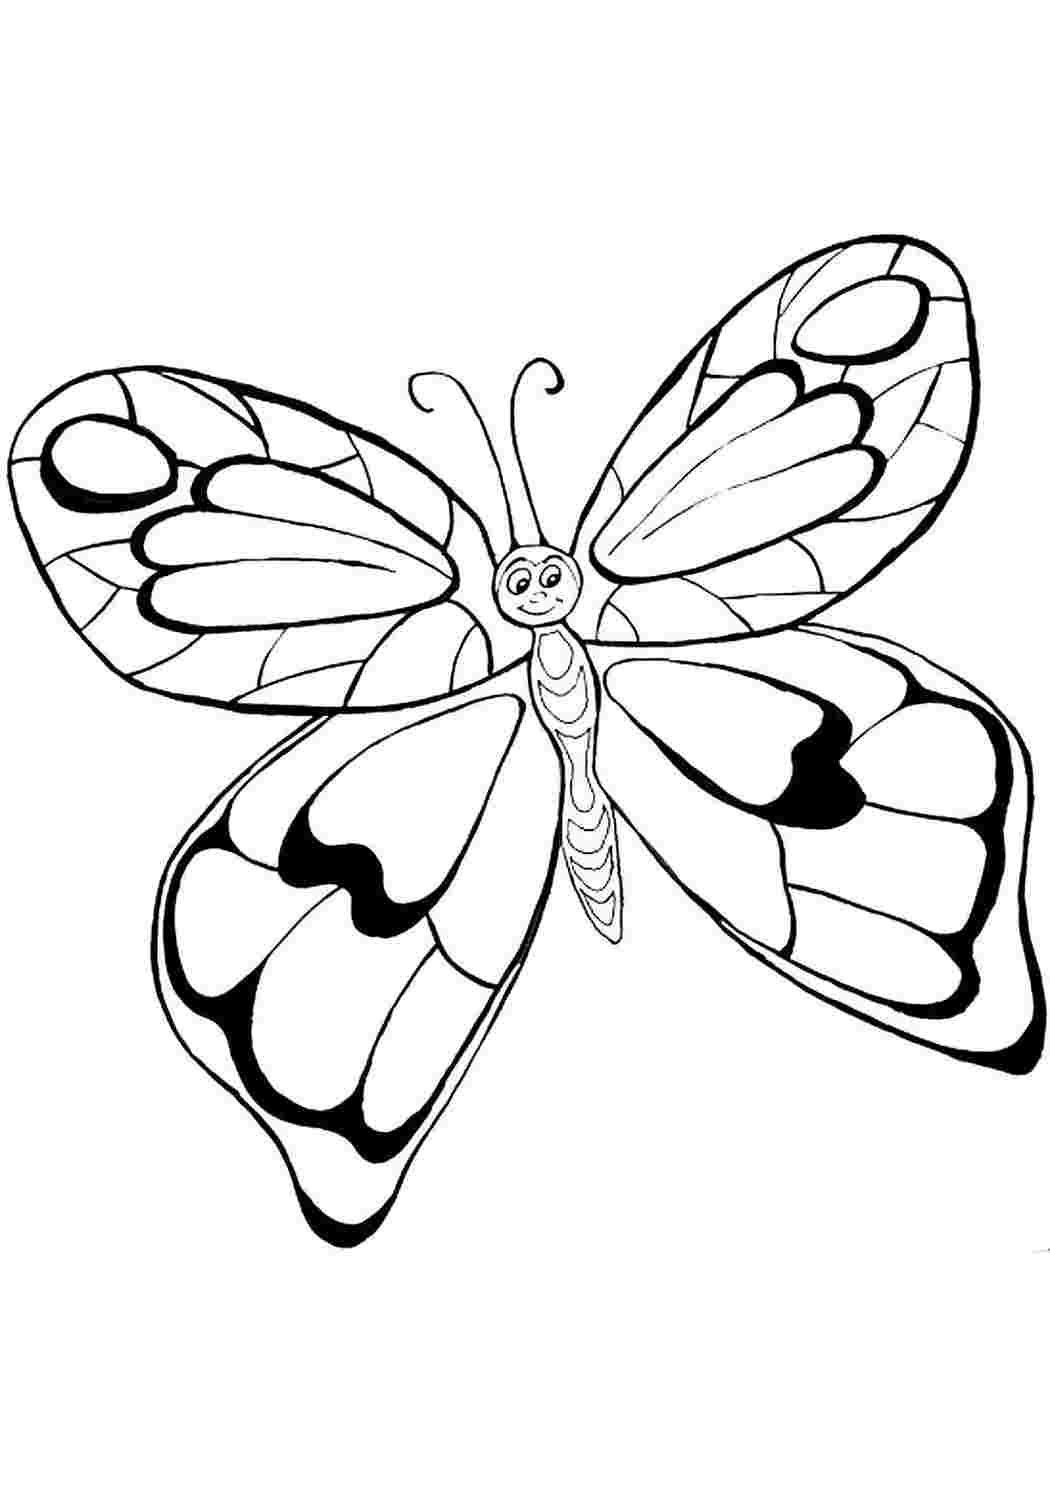 Раскраска 2 бабочки. Раскраска "бабочки". Бабочка раскраска для детей. Бабочка раскраска для малышей. Бабочка рисунок.